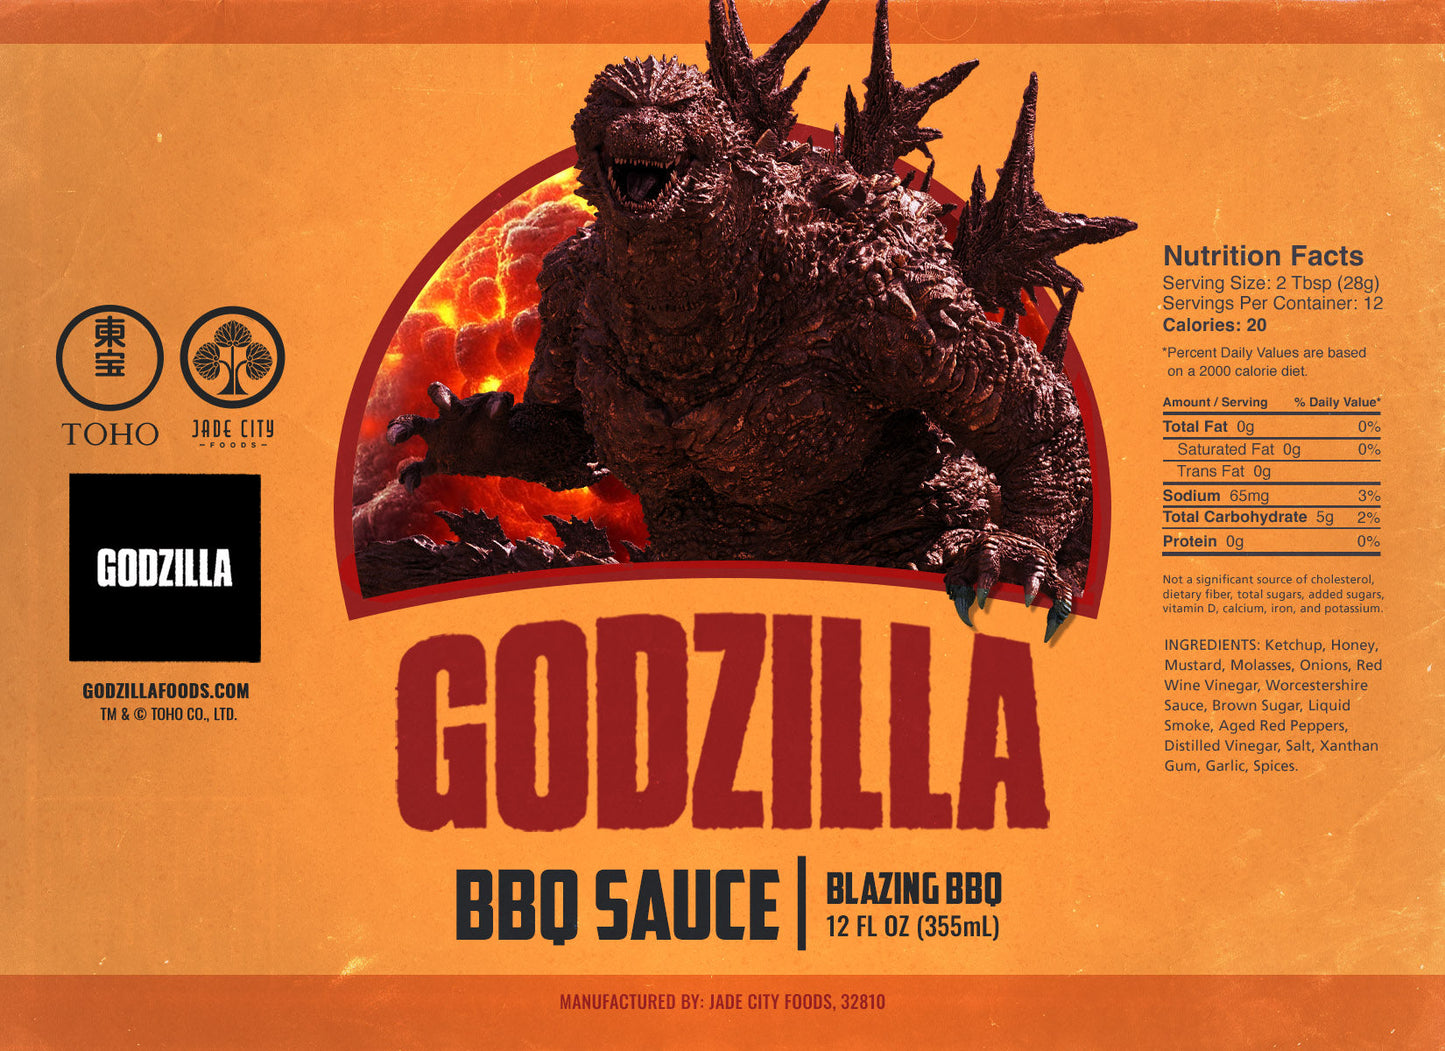 Godzilla's Blazing BBQ Sauce